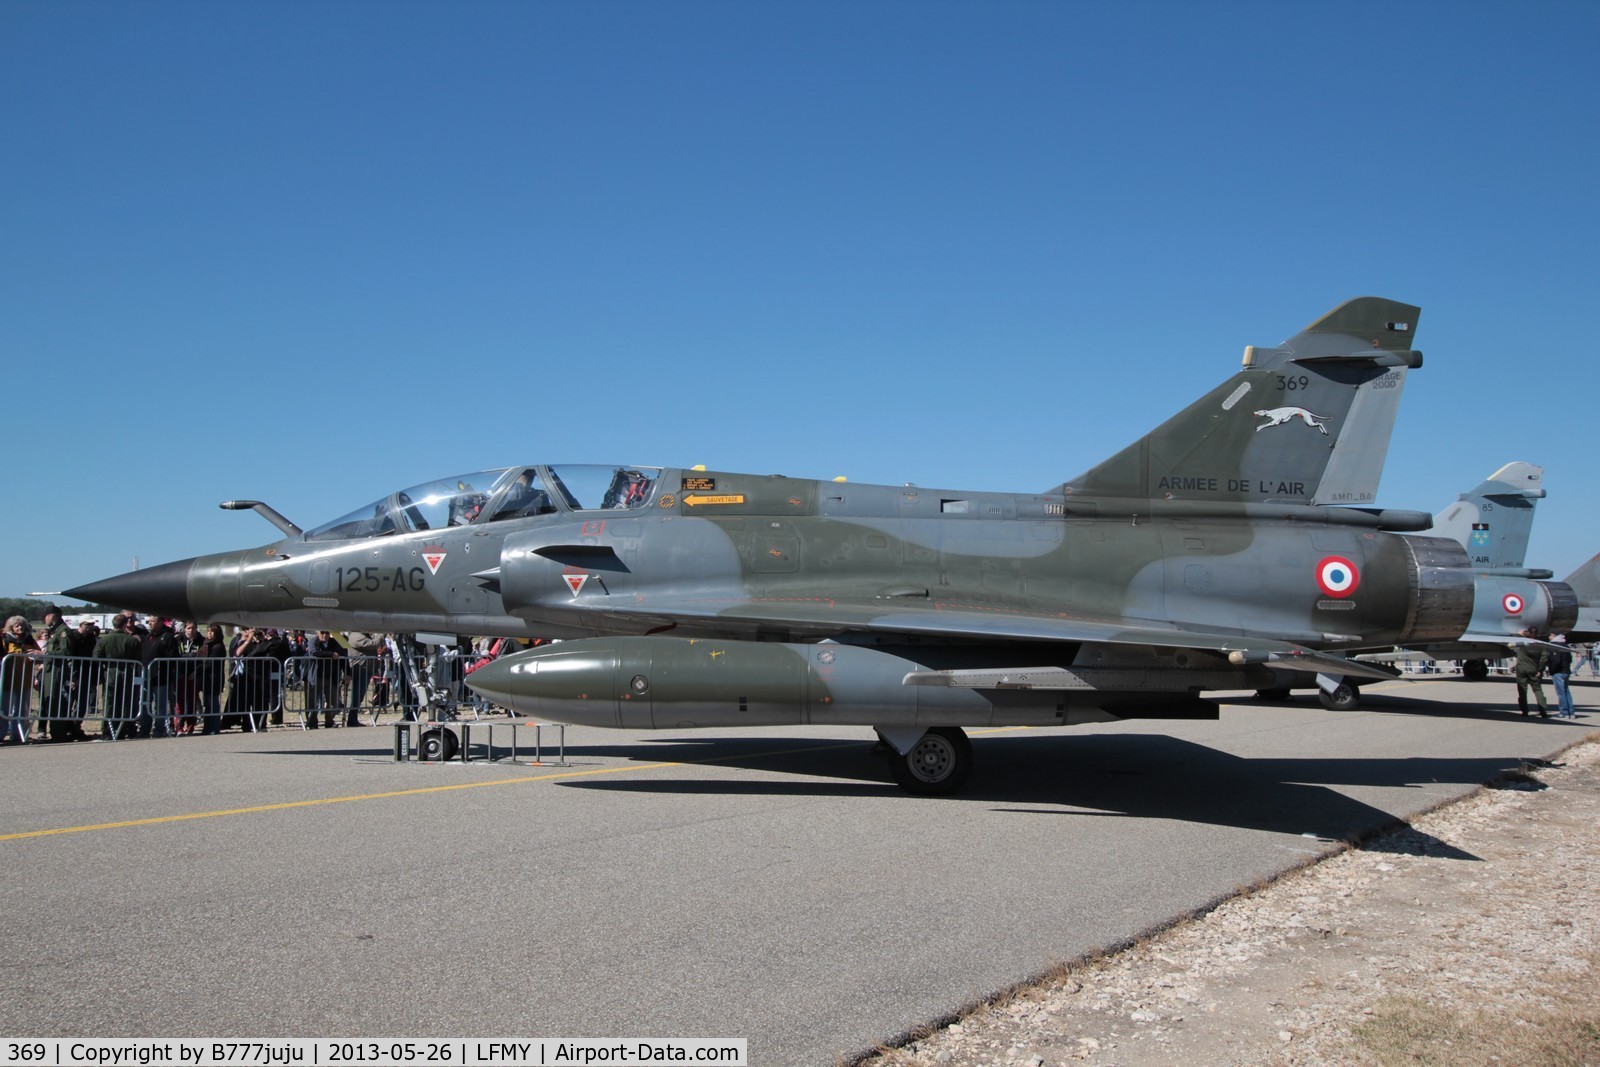 369, Dassault Mirage 2000N C/N 366, at Salon de Provence